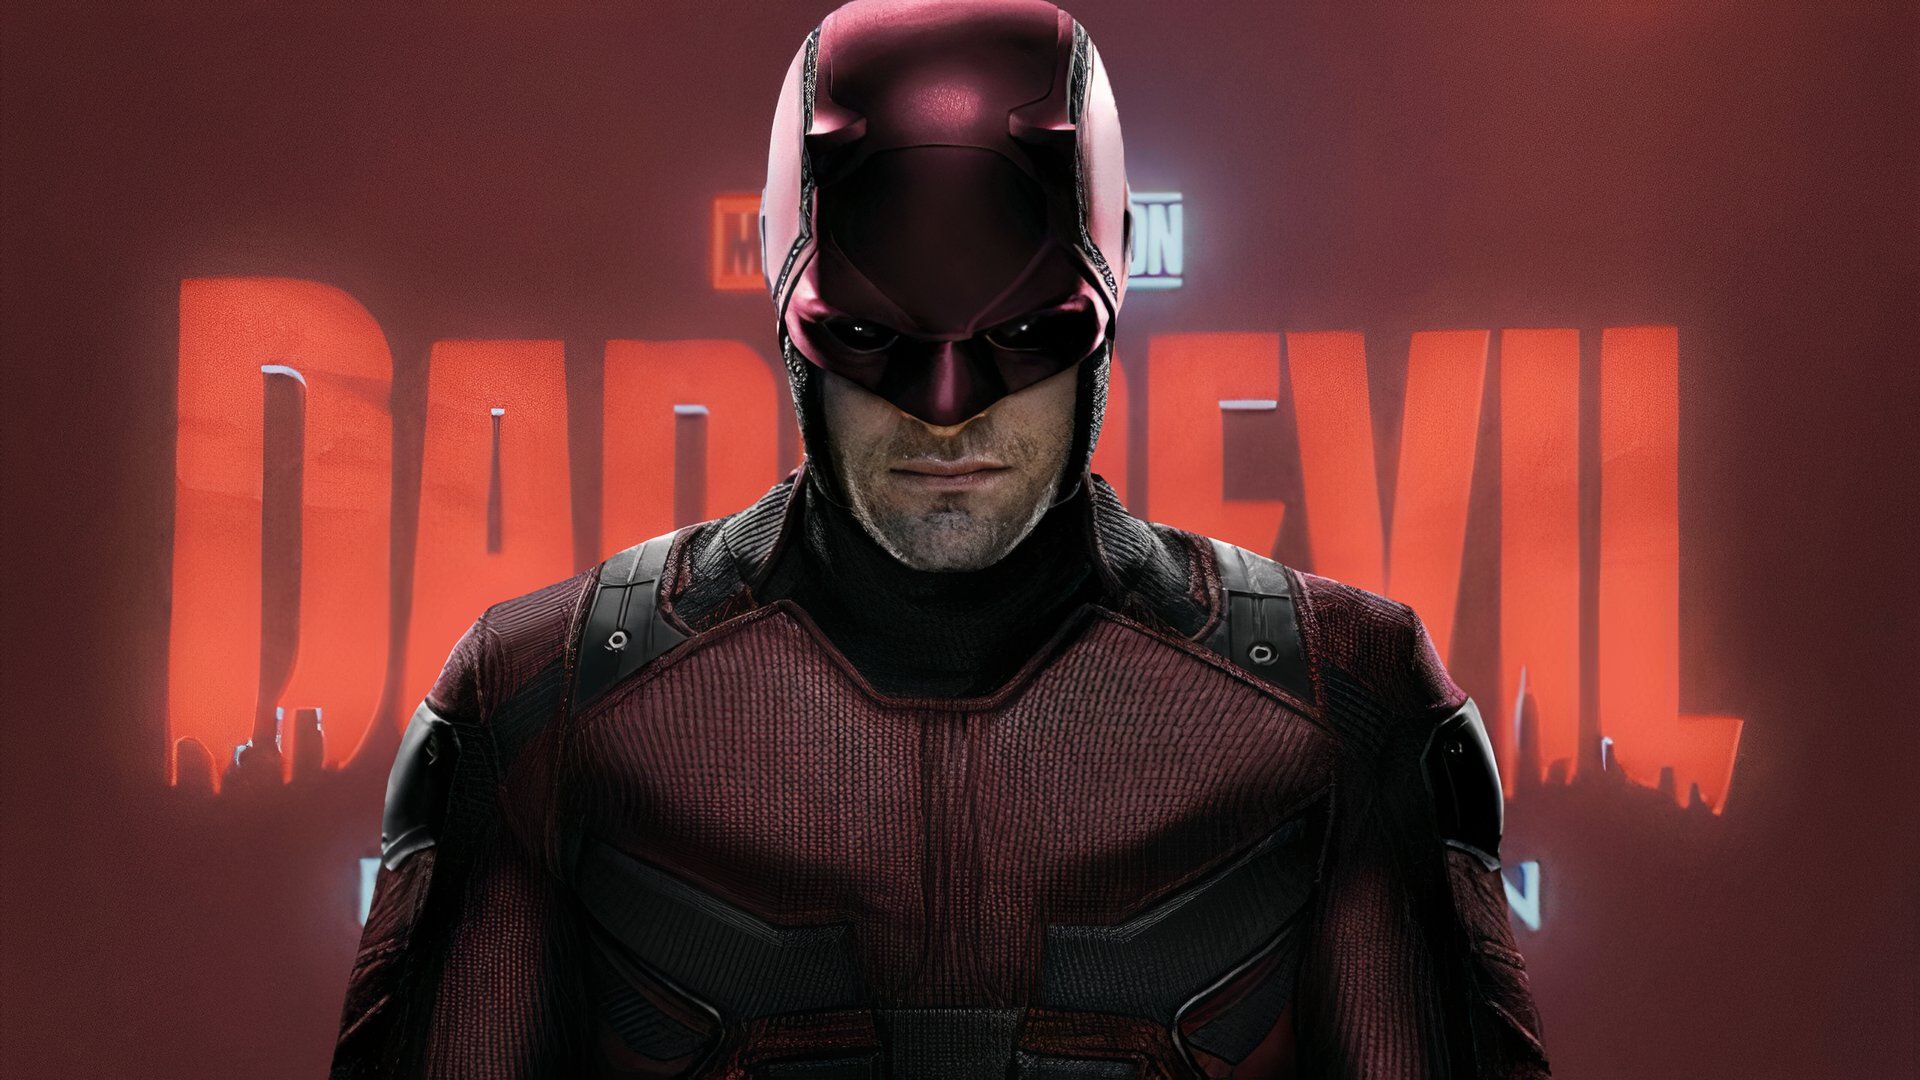 Daredevil in front of the new Born Again logo.